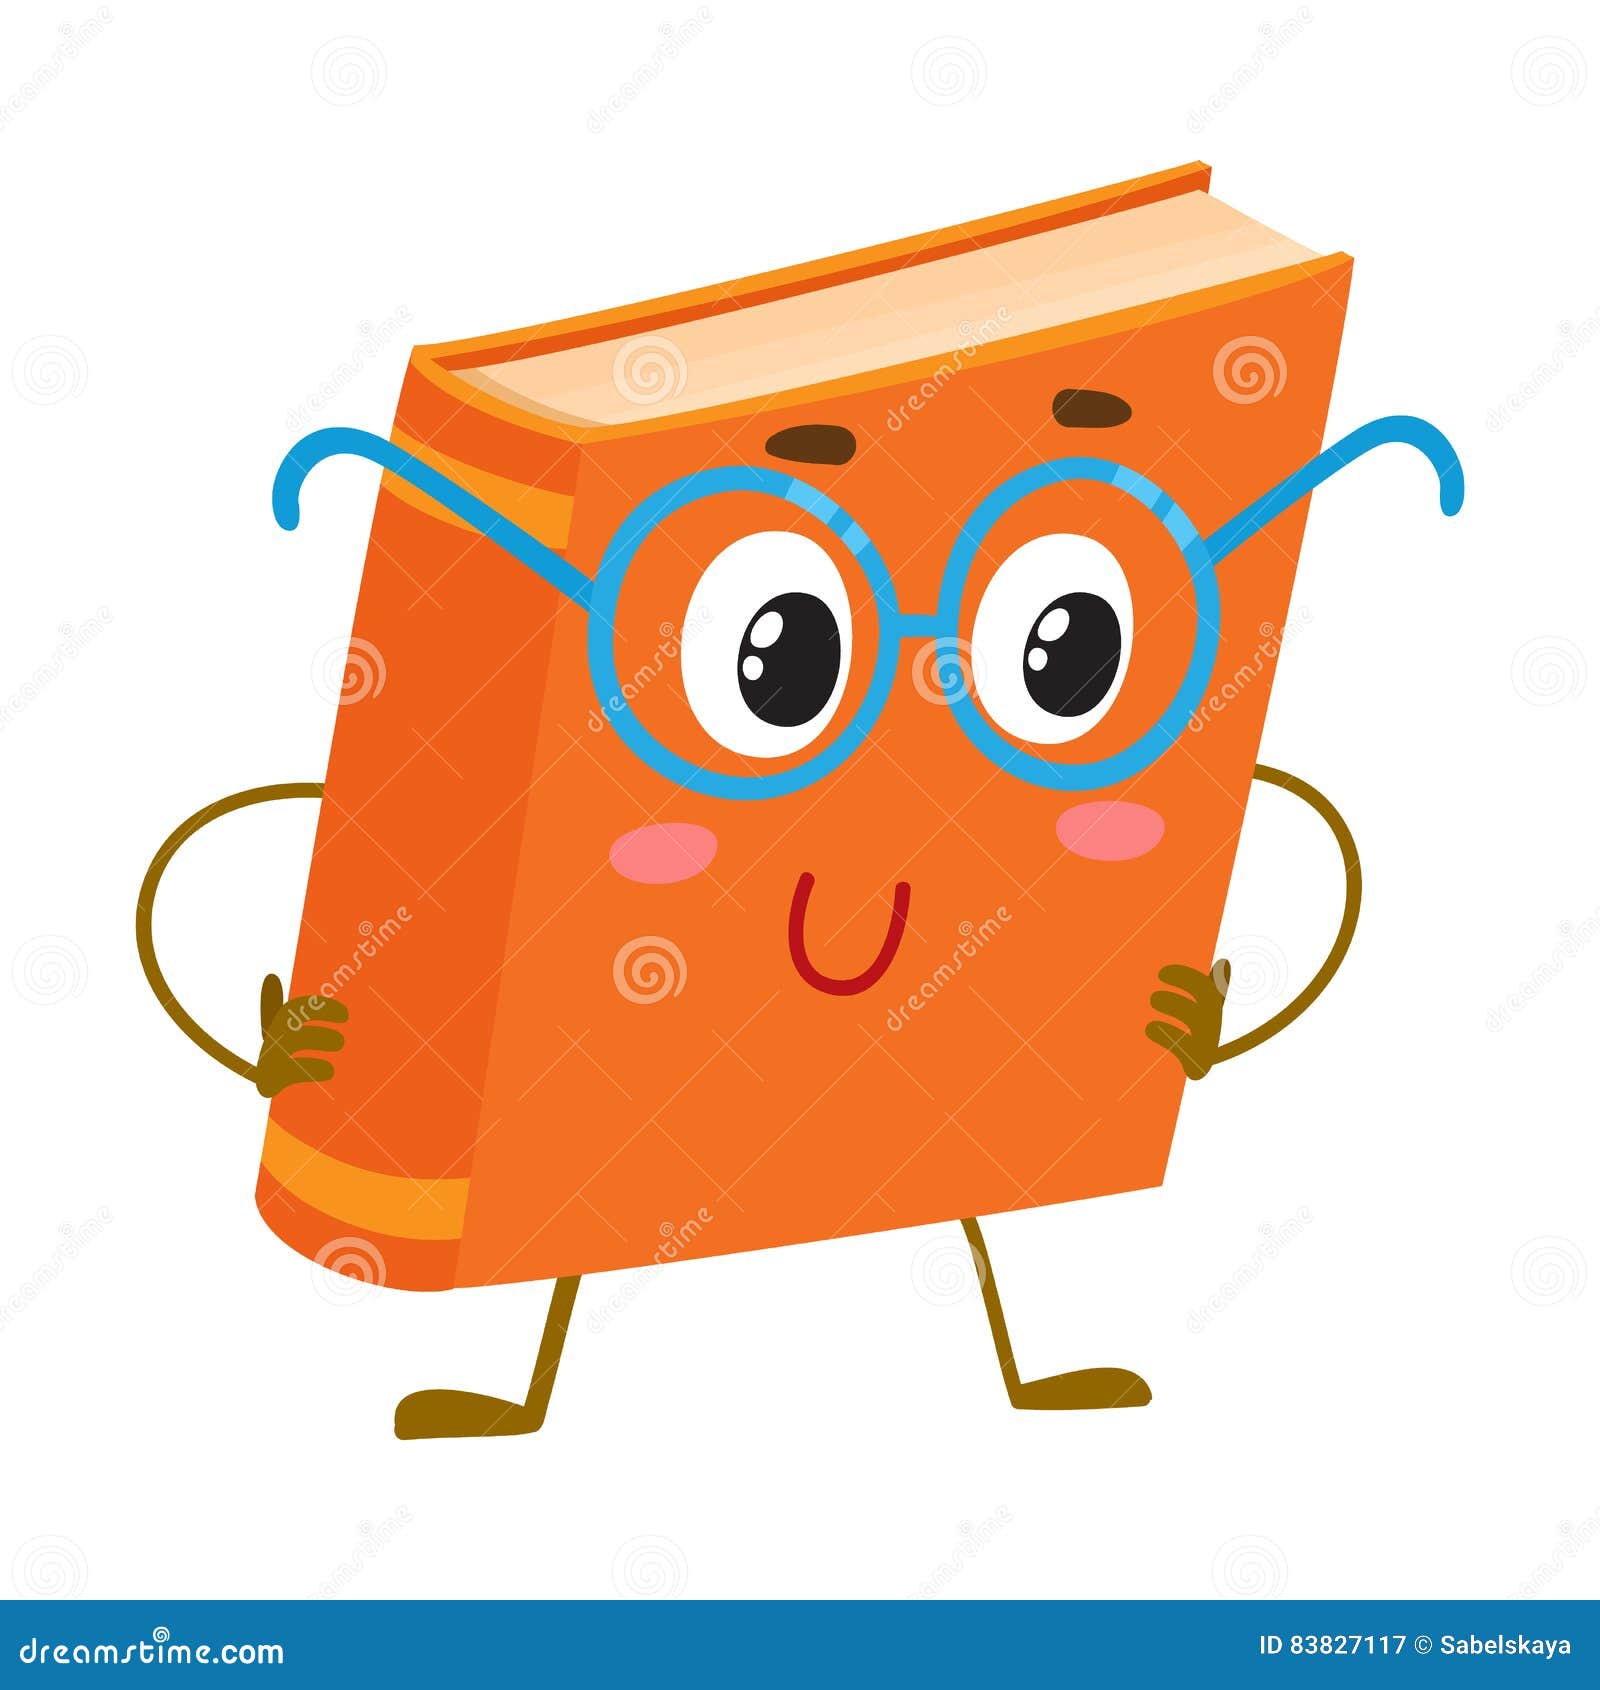 Funny Orange Book Character in Round Blue Nerdish Glasses Stock Vector ...